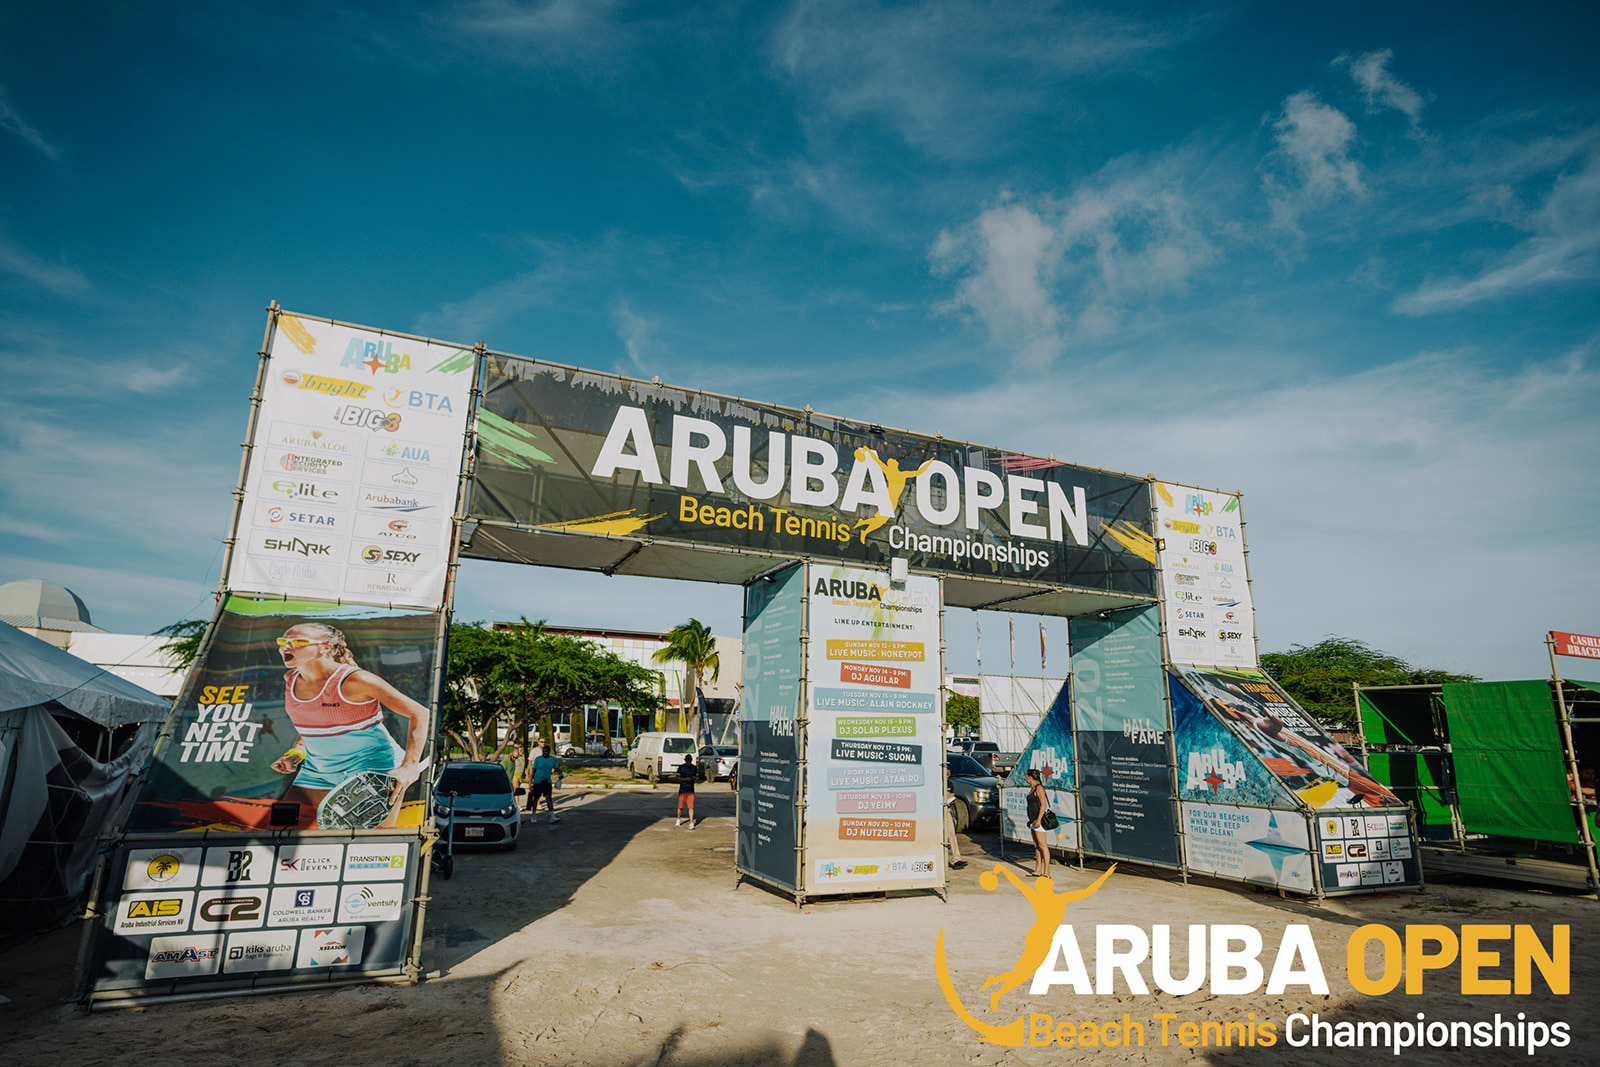 Aruba Open Beach Tennis Championships